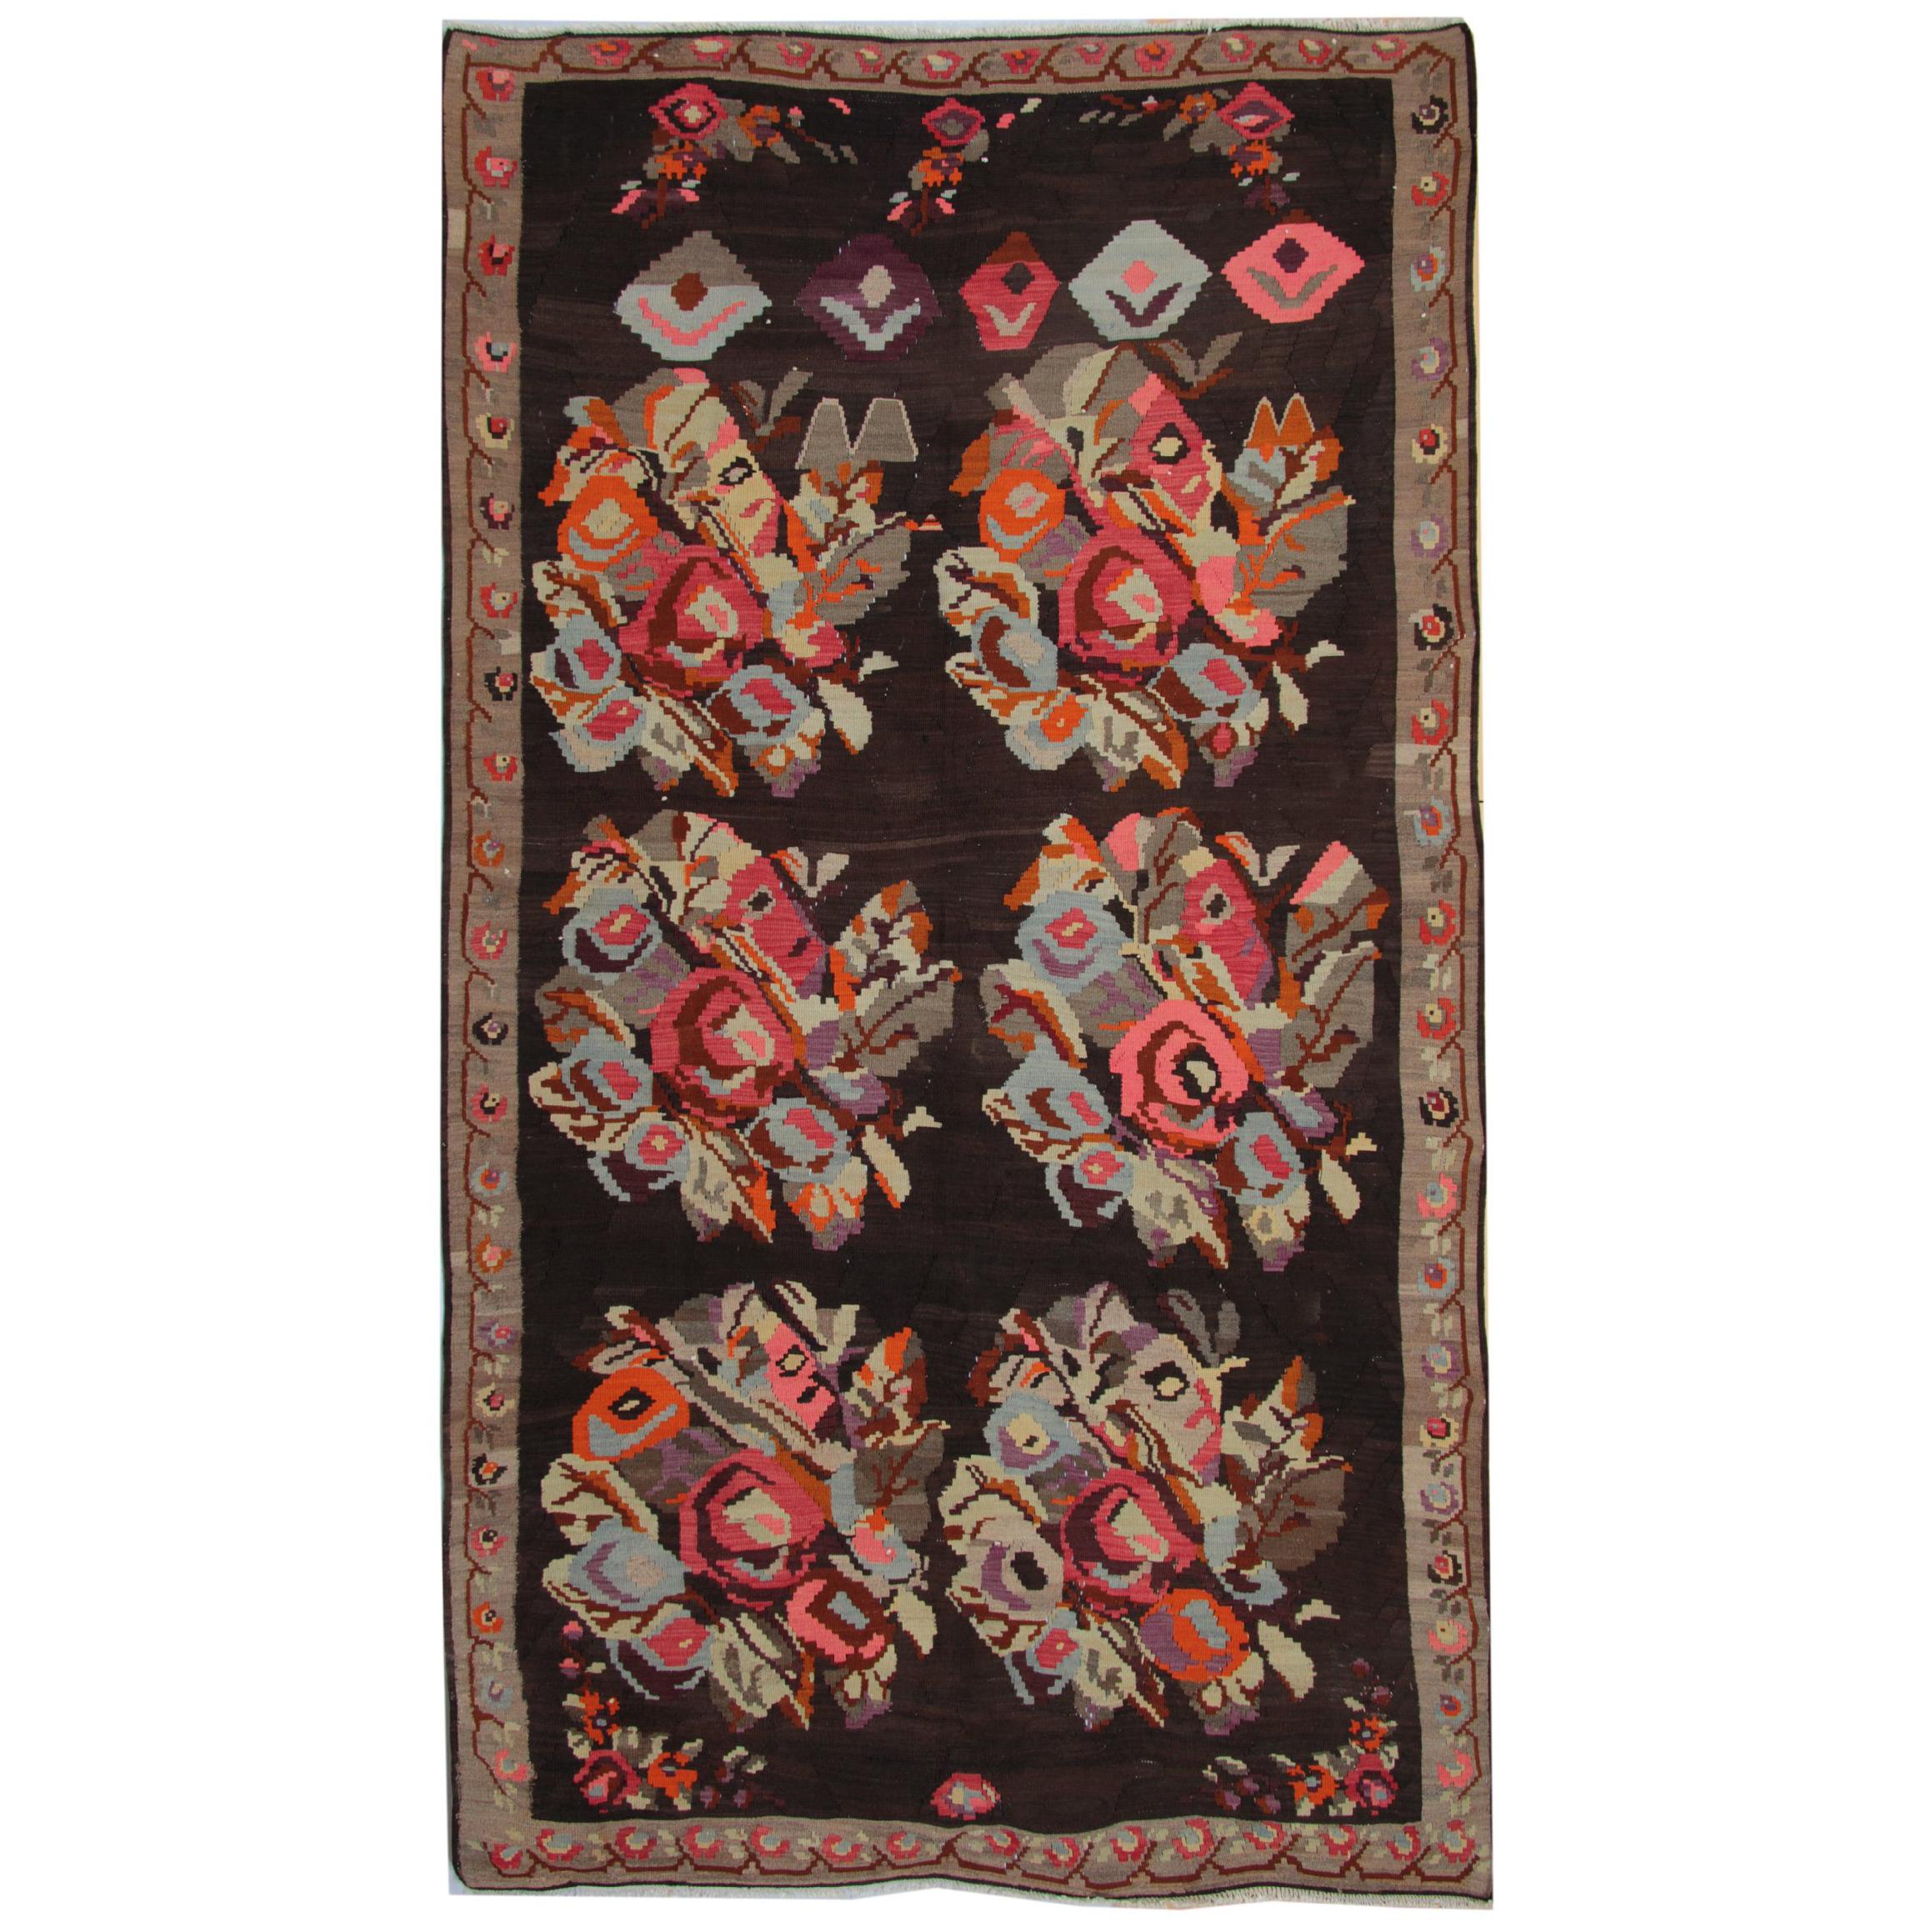 Antiker geblümter antiker Kelim-Teppich, handgefertigter Teppich und handgewebter Teppich aus Karabagh